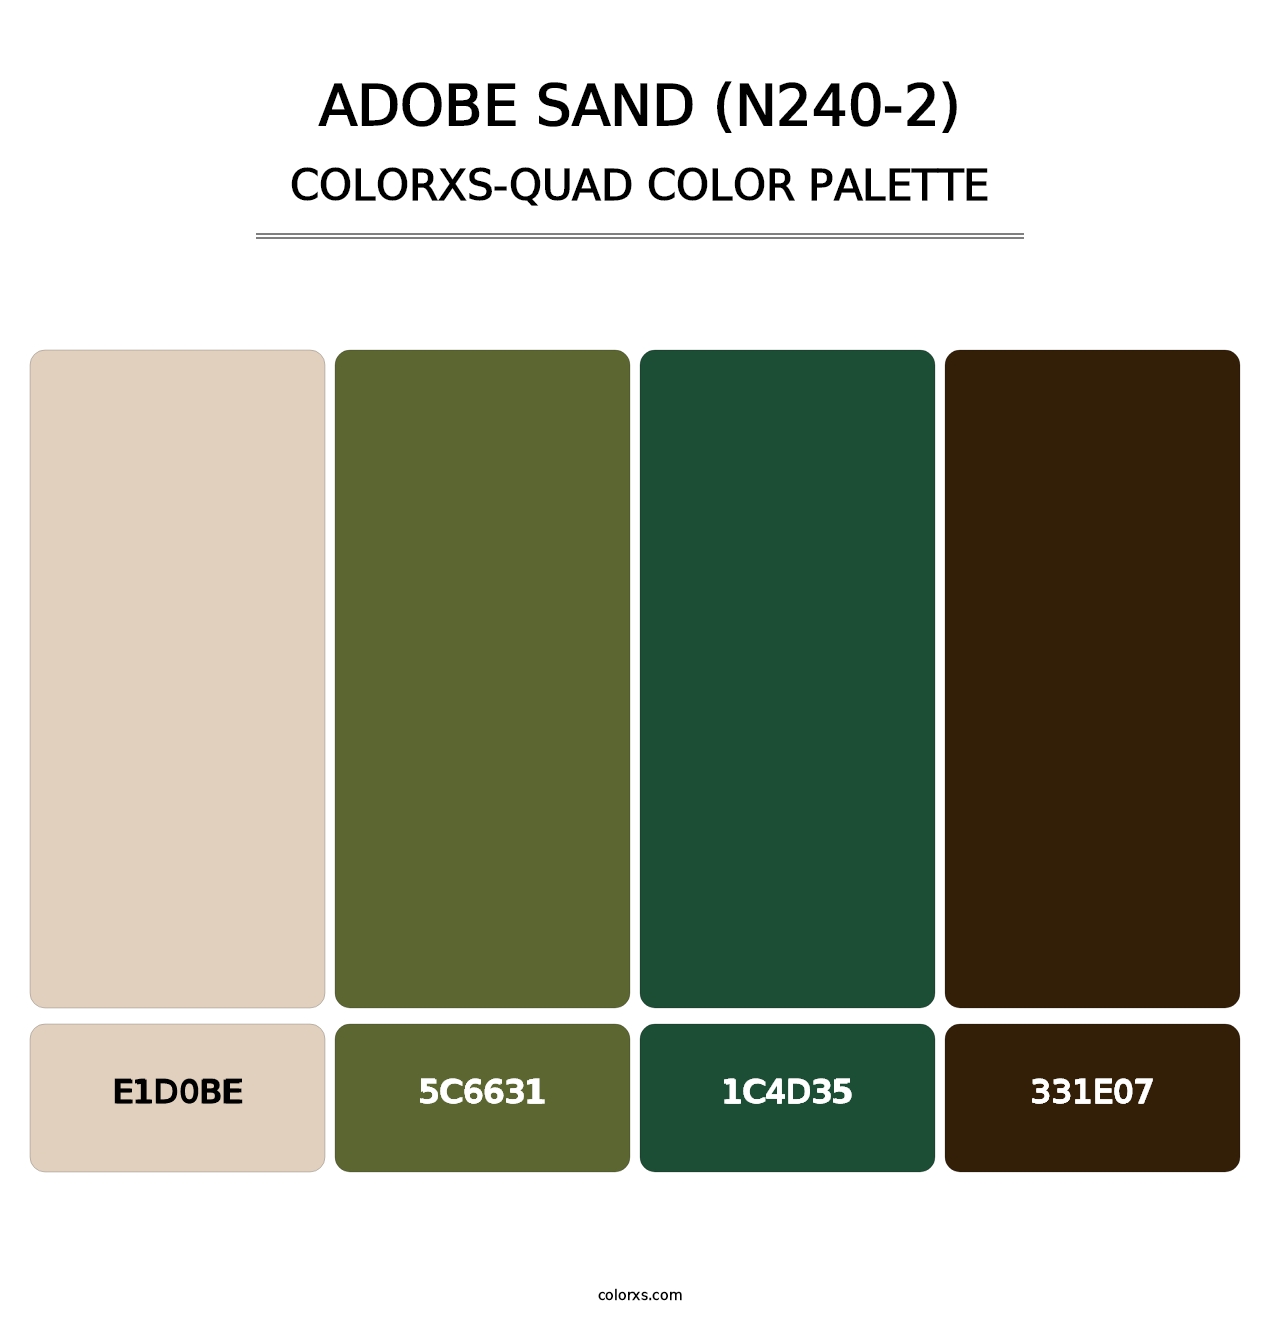 Adobe Sand (N240-2) - Colorxs Quad Palette